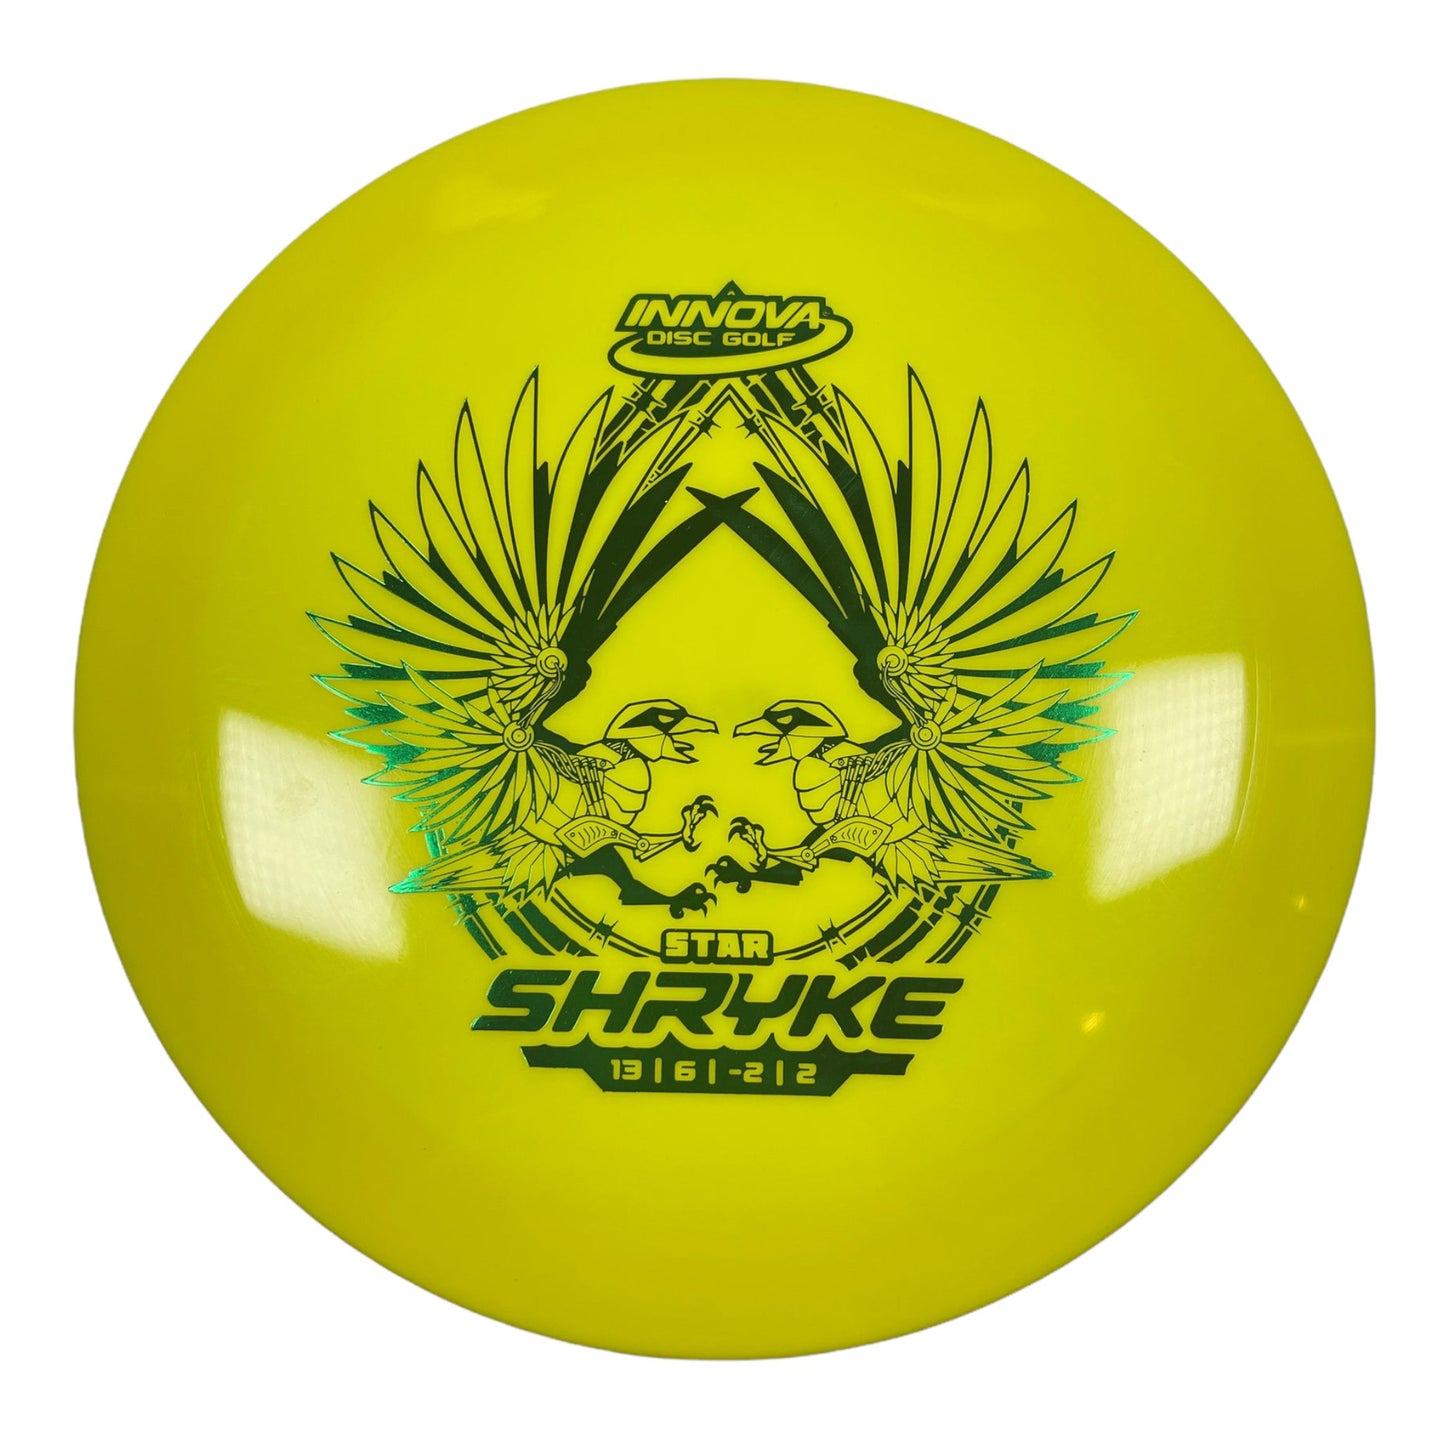 Innova Champion Discs Shryke | Star | Yellow/Green 175g Disc Golf